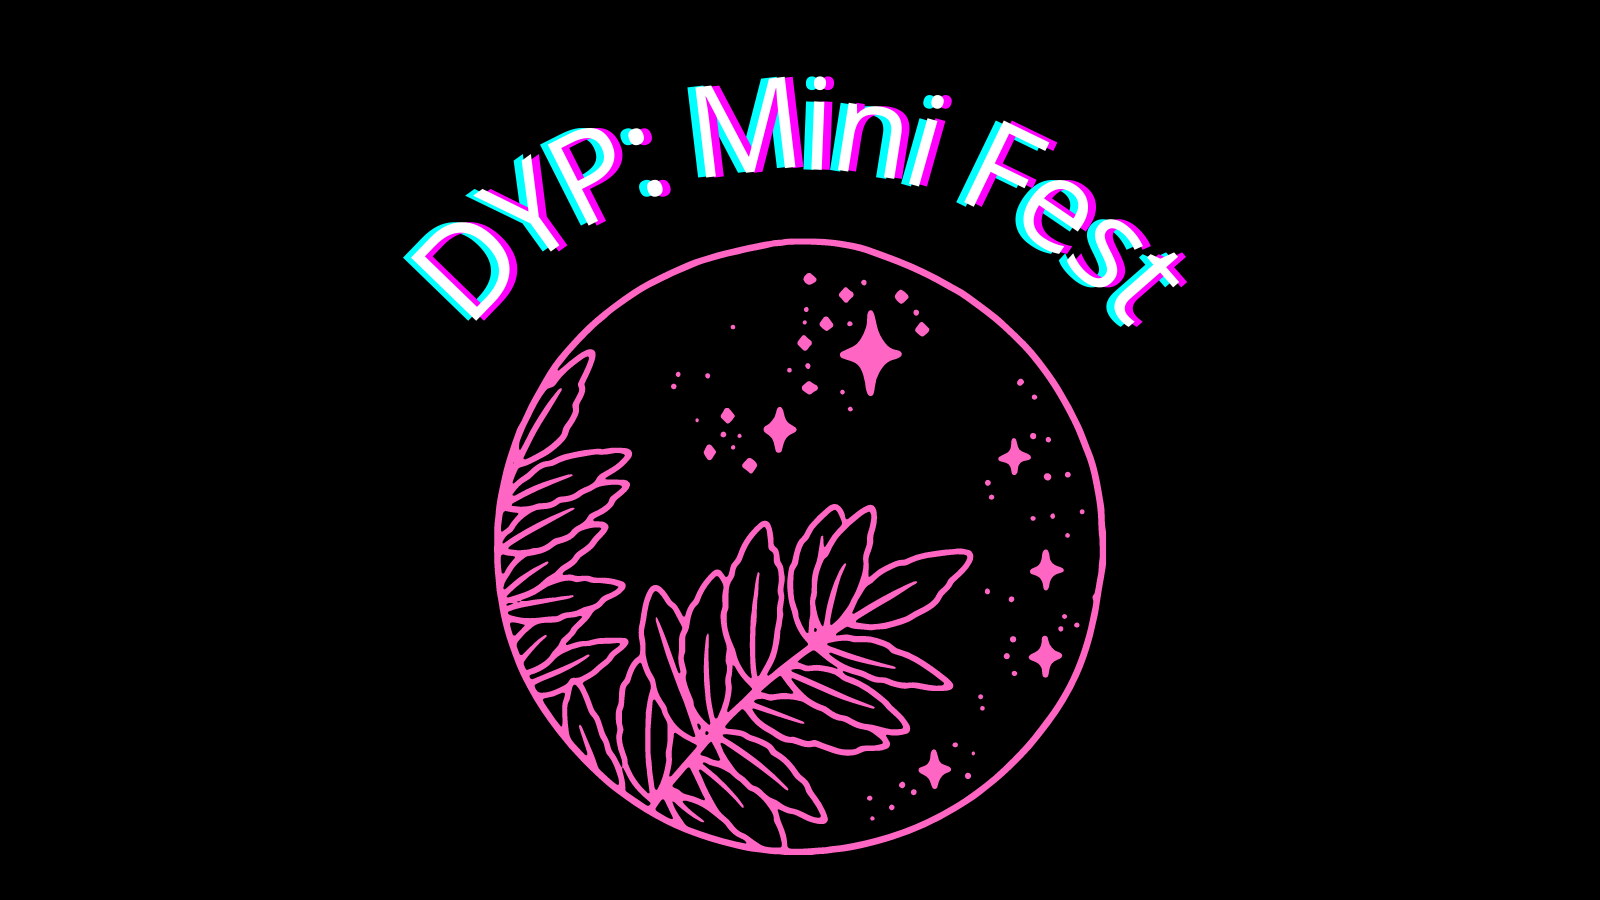 DYP Mini-Fest